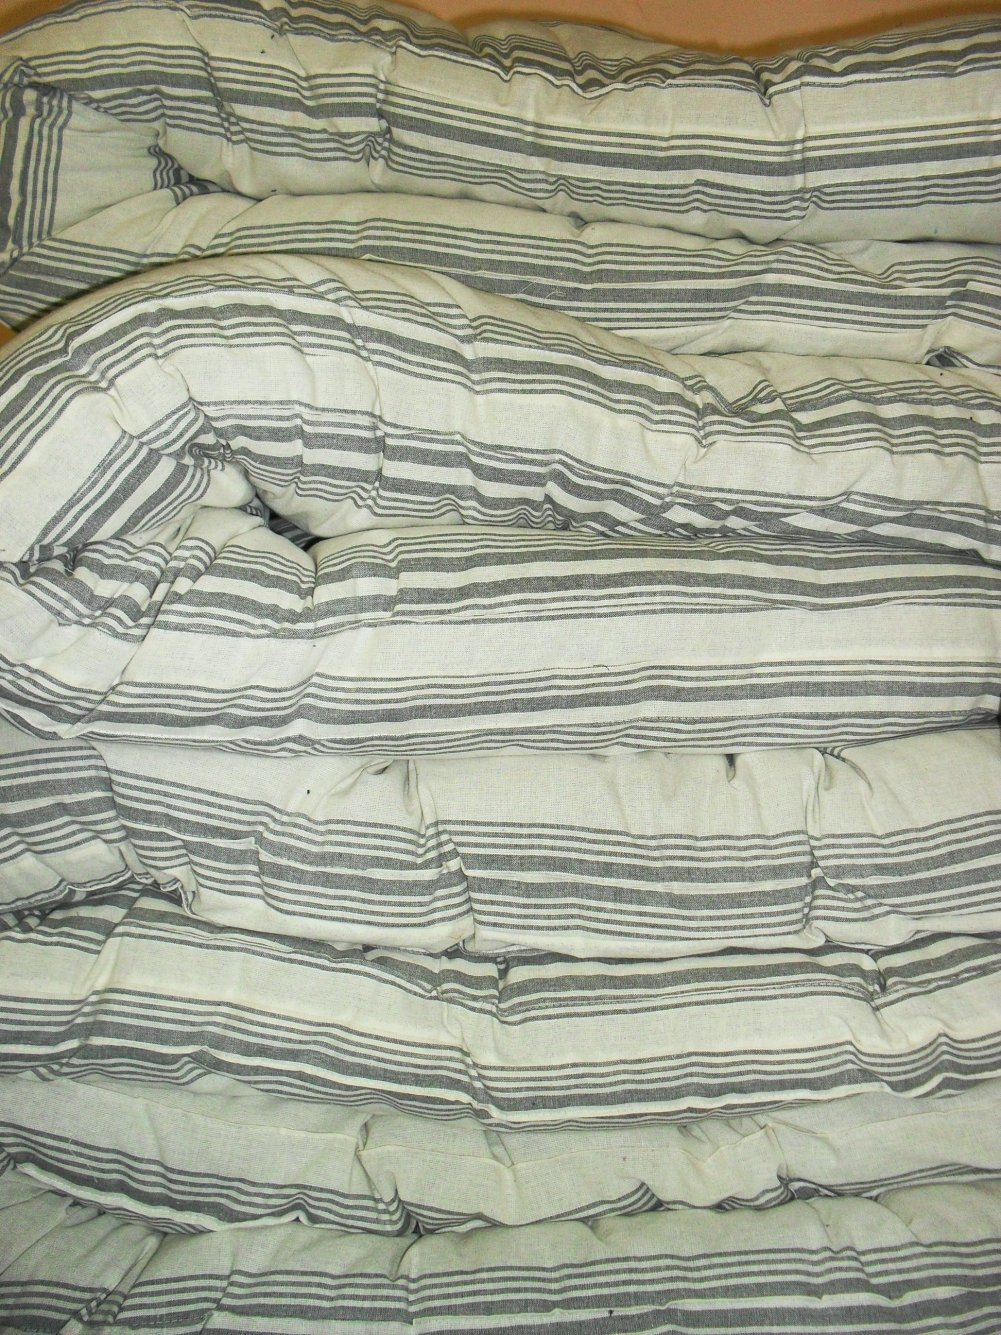 Старые ватные одеяла и матрасы